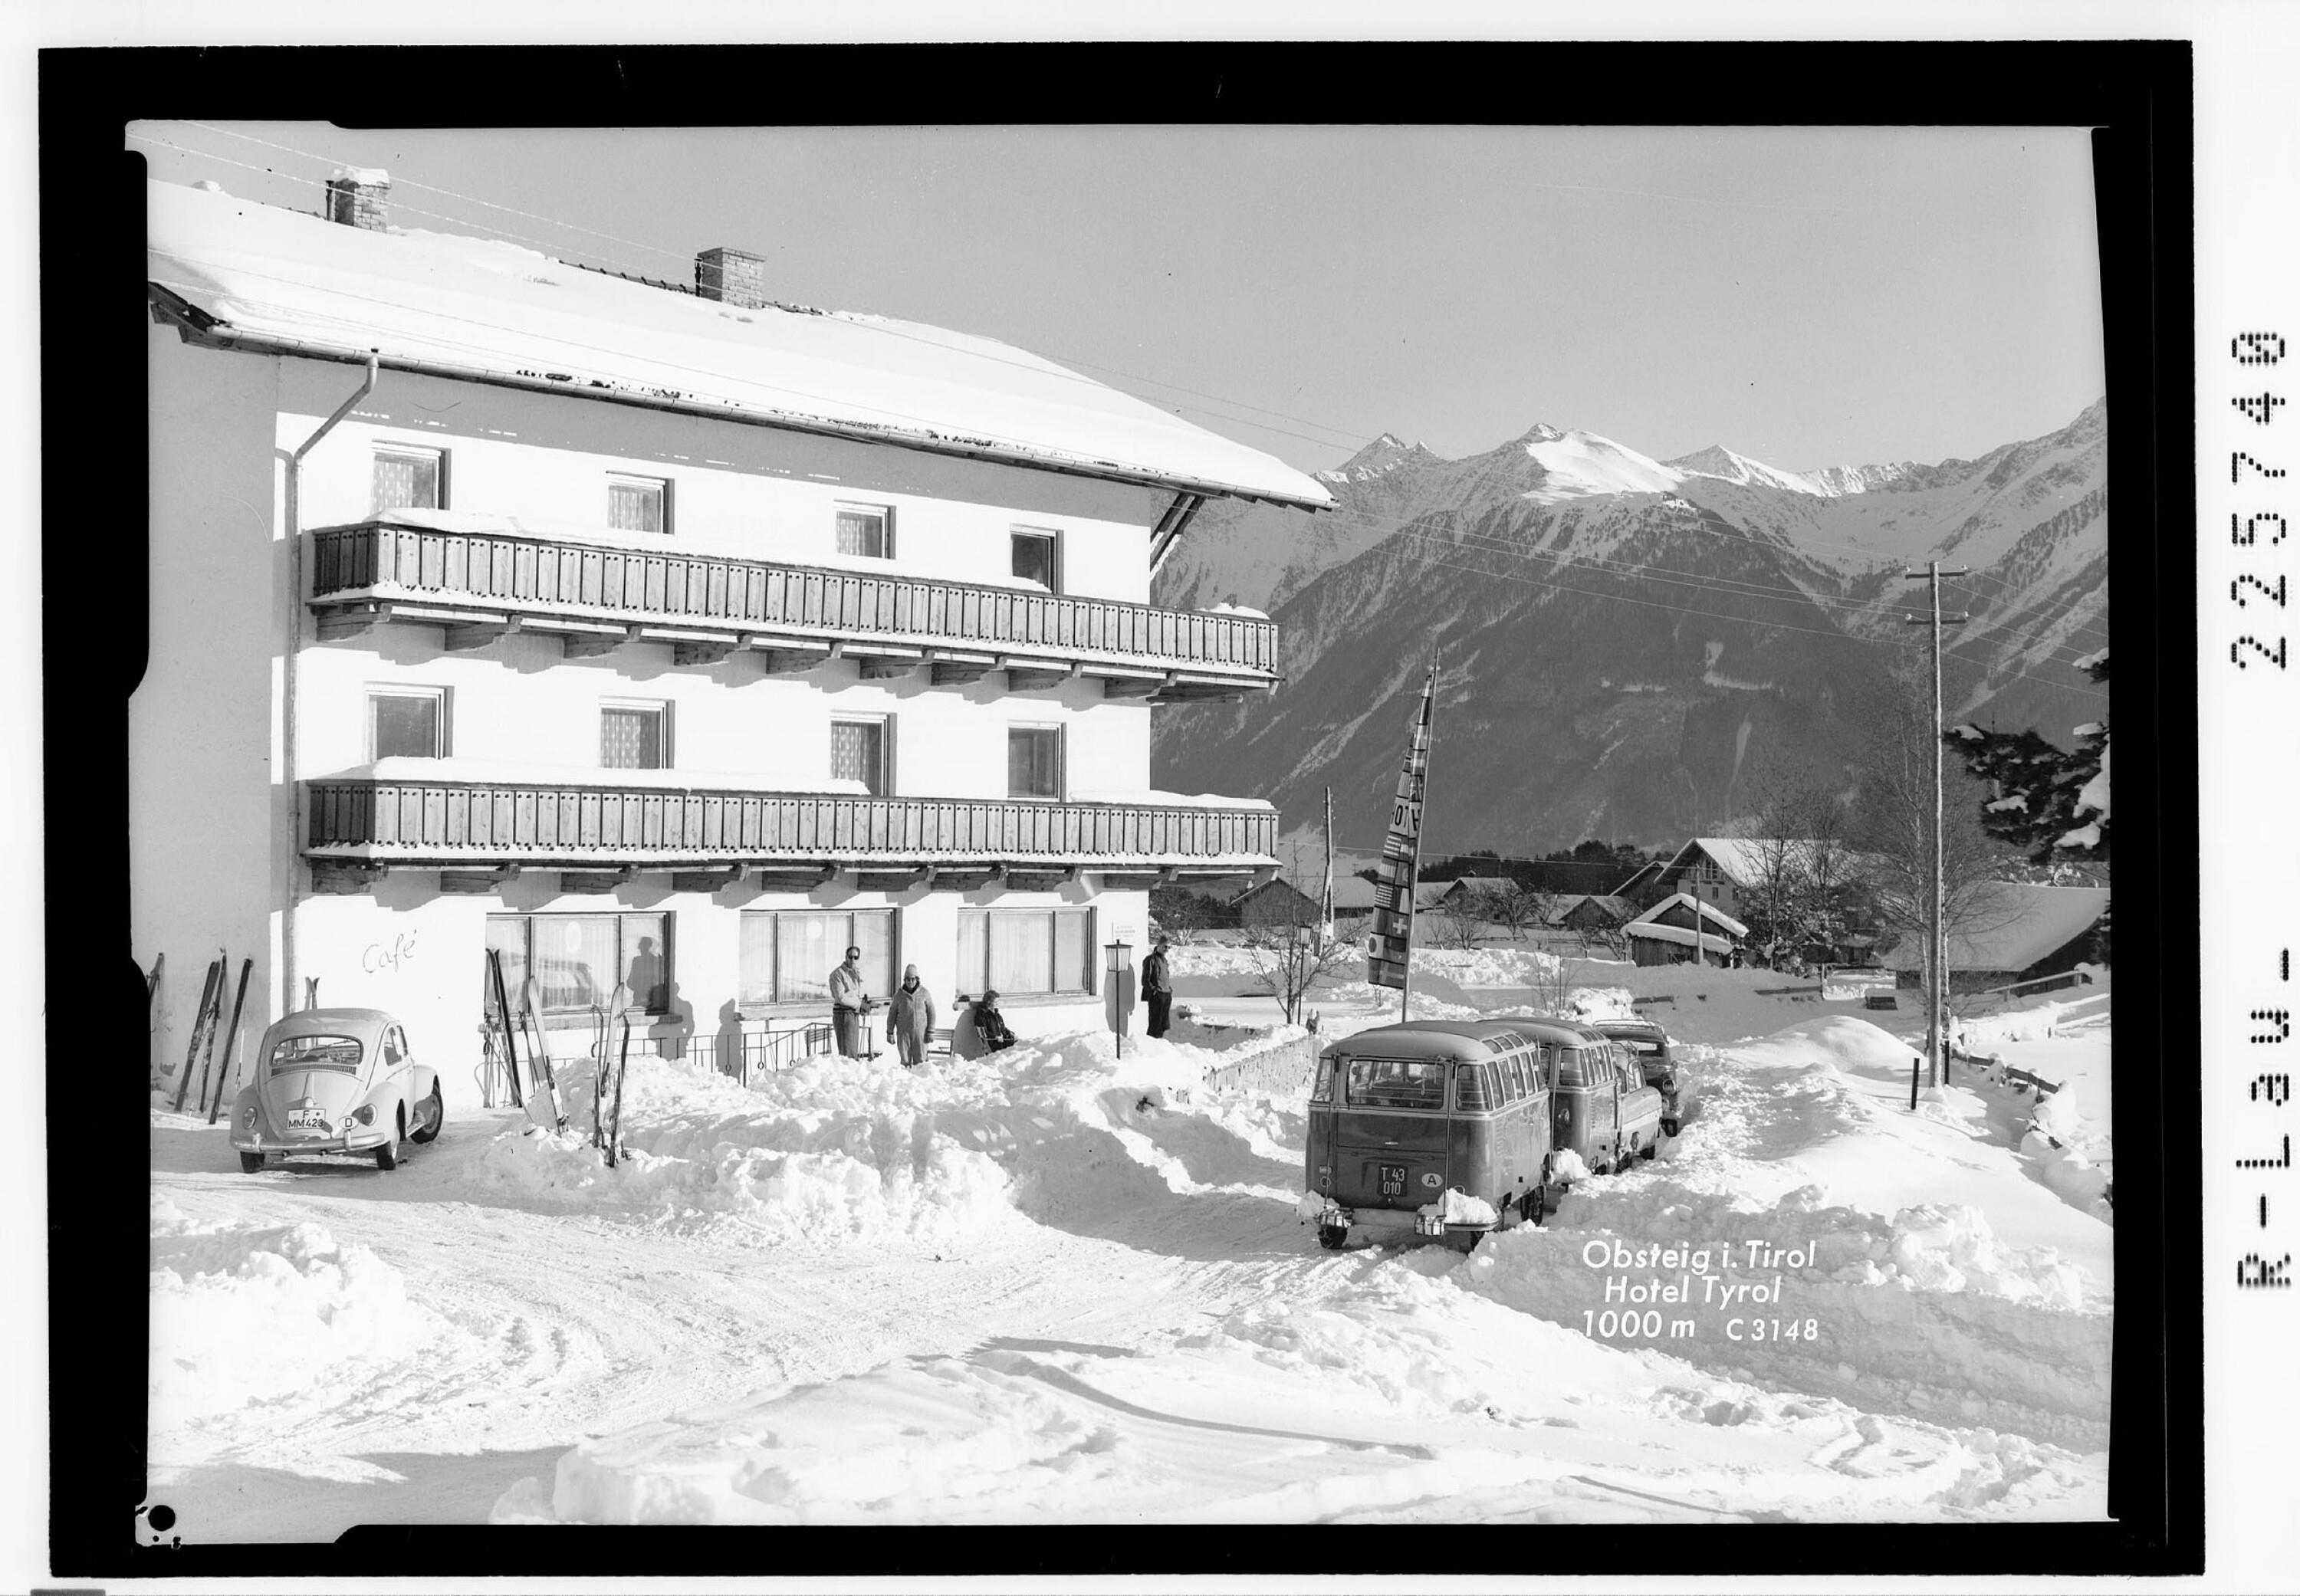 Obsteig in Tirol / Hotel Tyrol 1000 m></div>


    <hr>
    <div class=